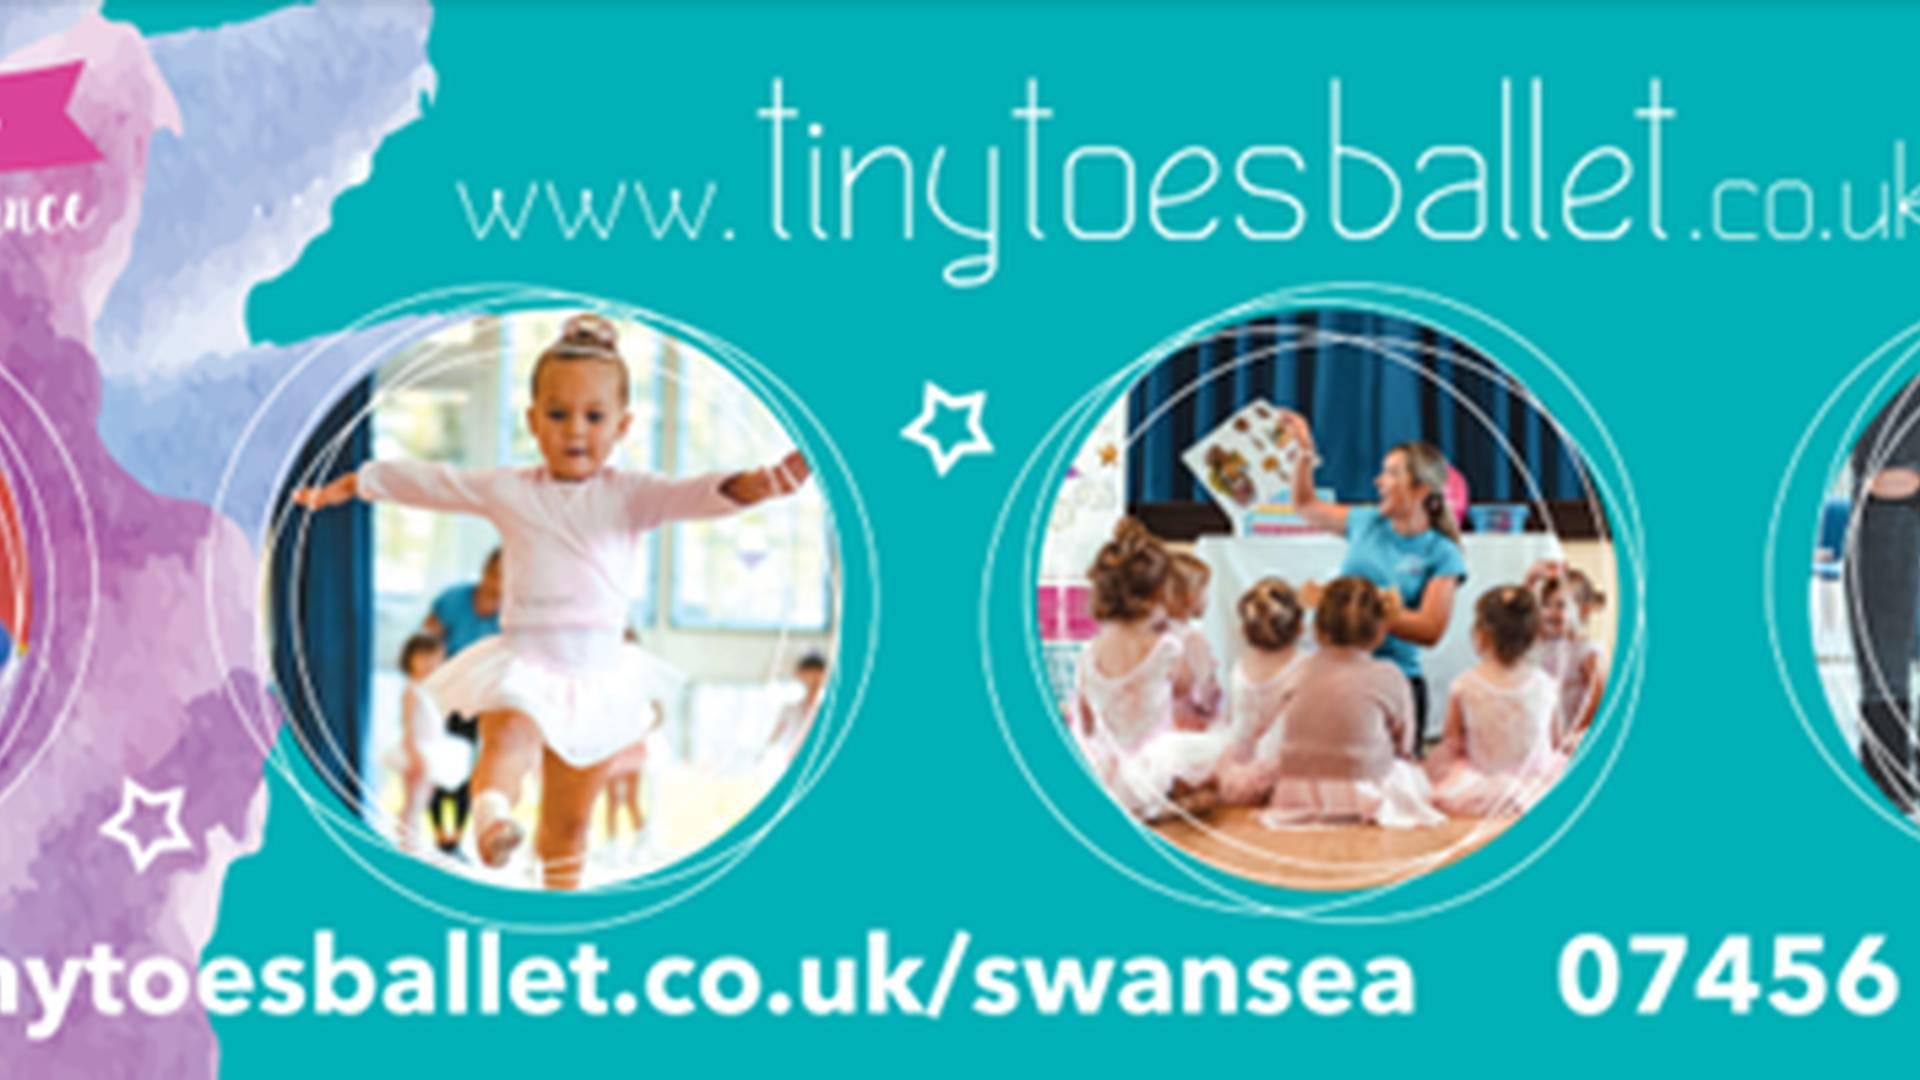 Tiny toes ballet, Swansea kids ballet classes photo